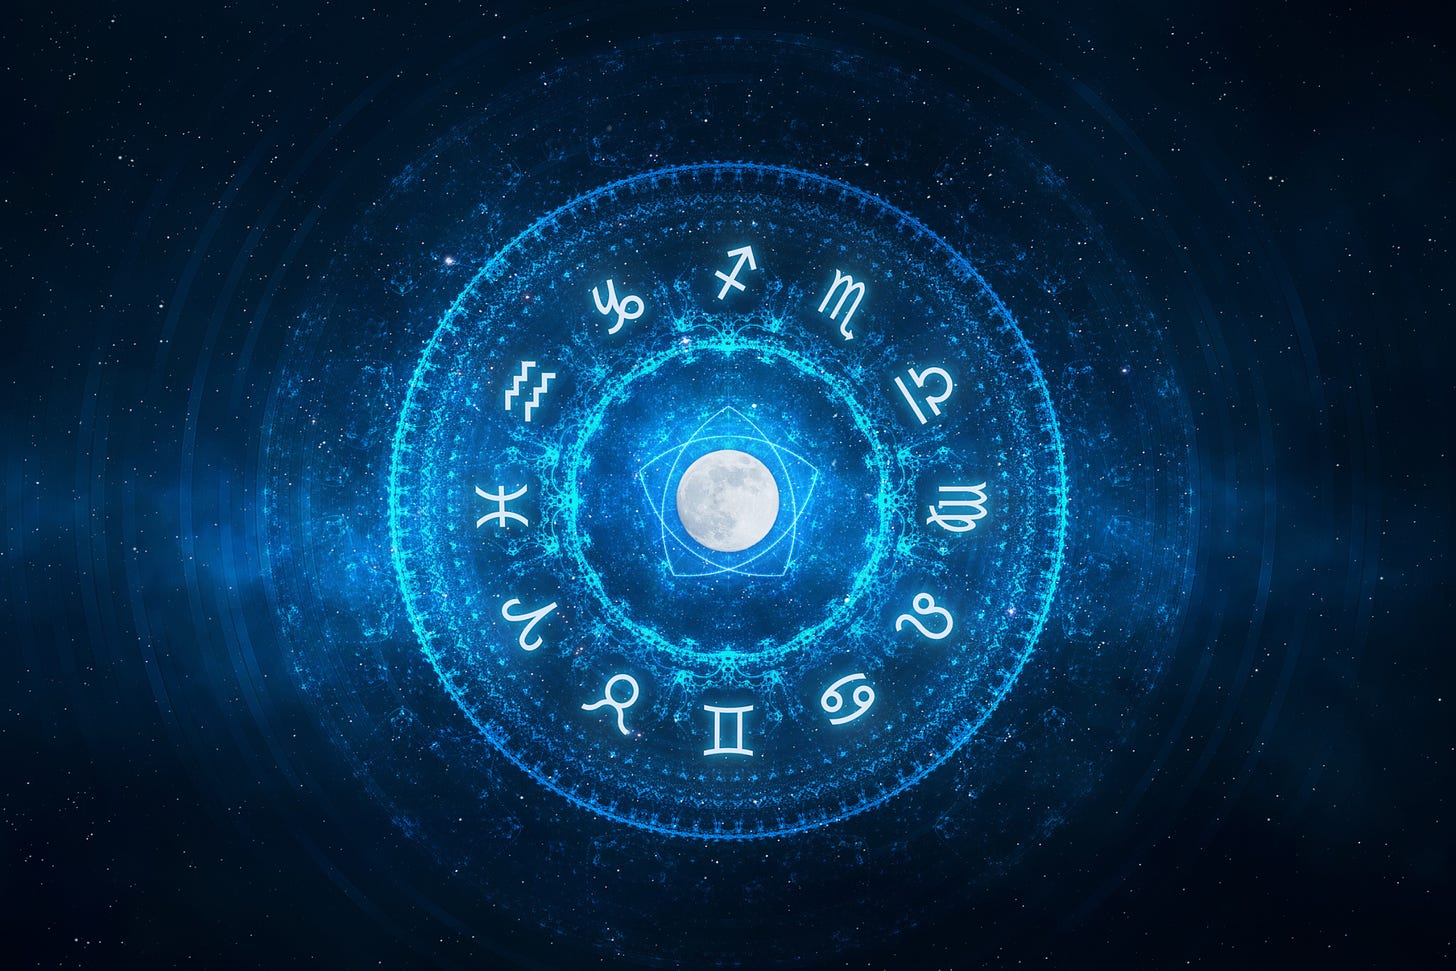 Zodiac signs in blue circle on dark background